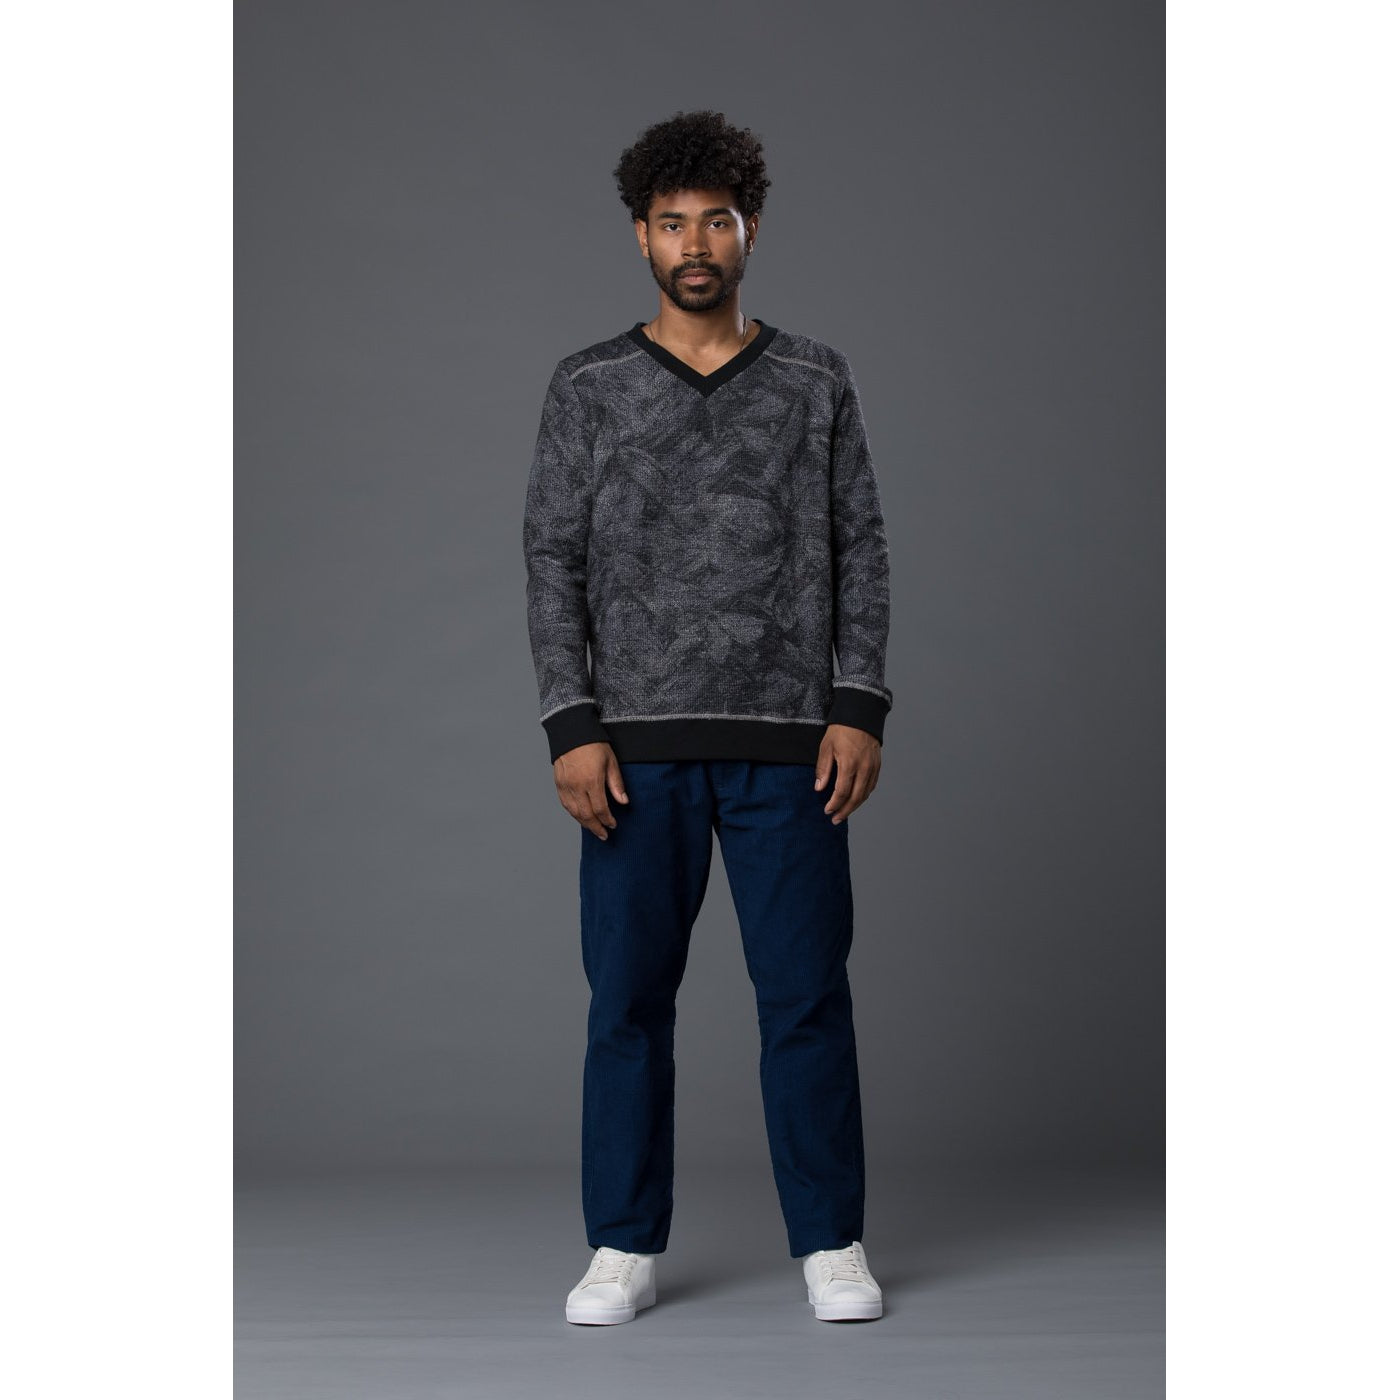 Thaddeus O'Neil Textured Navy Pullover Sweater